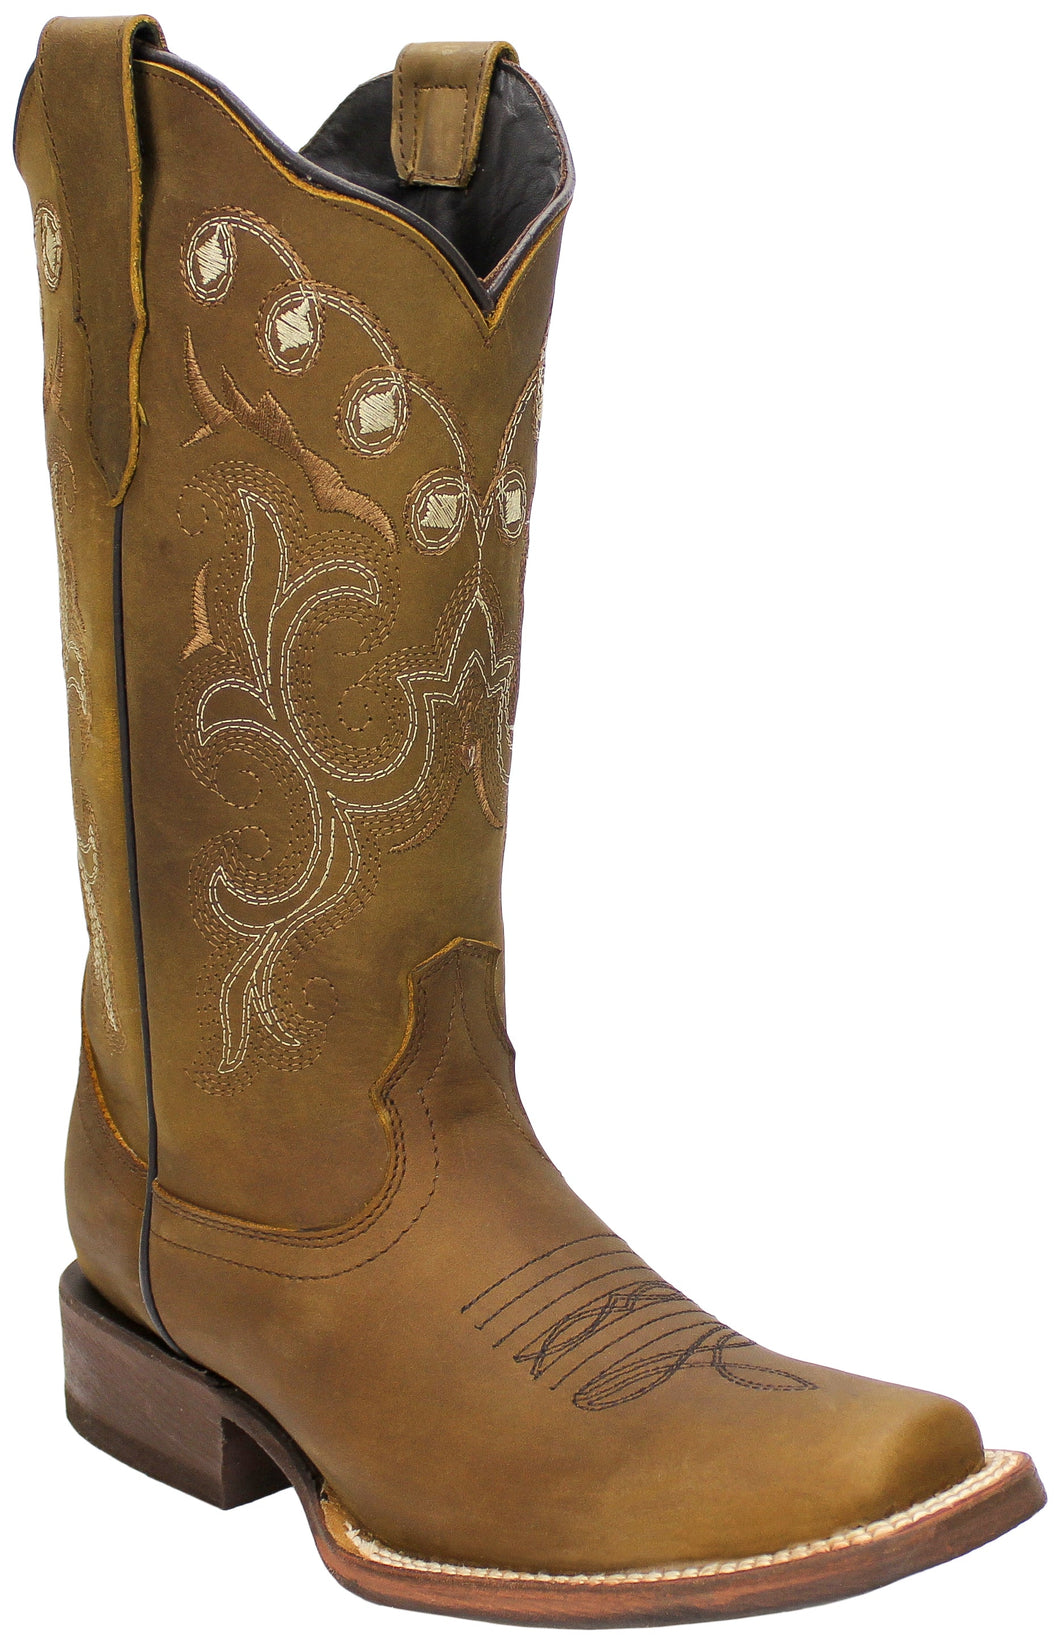 Silverton Sara All Leather Square Toe Cowboy Boots (Tobacco)